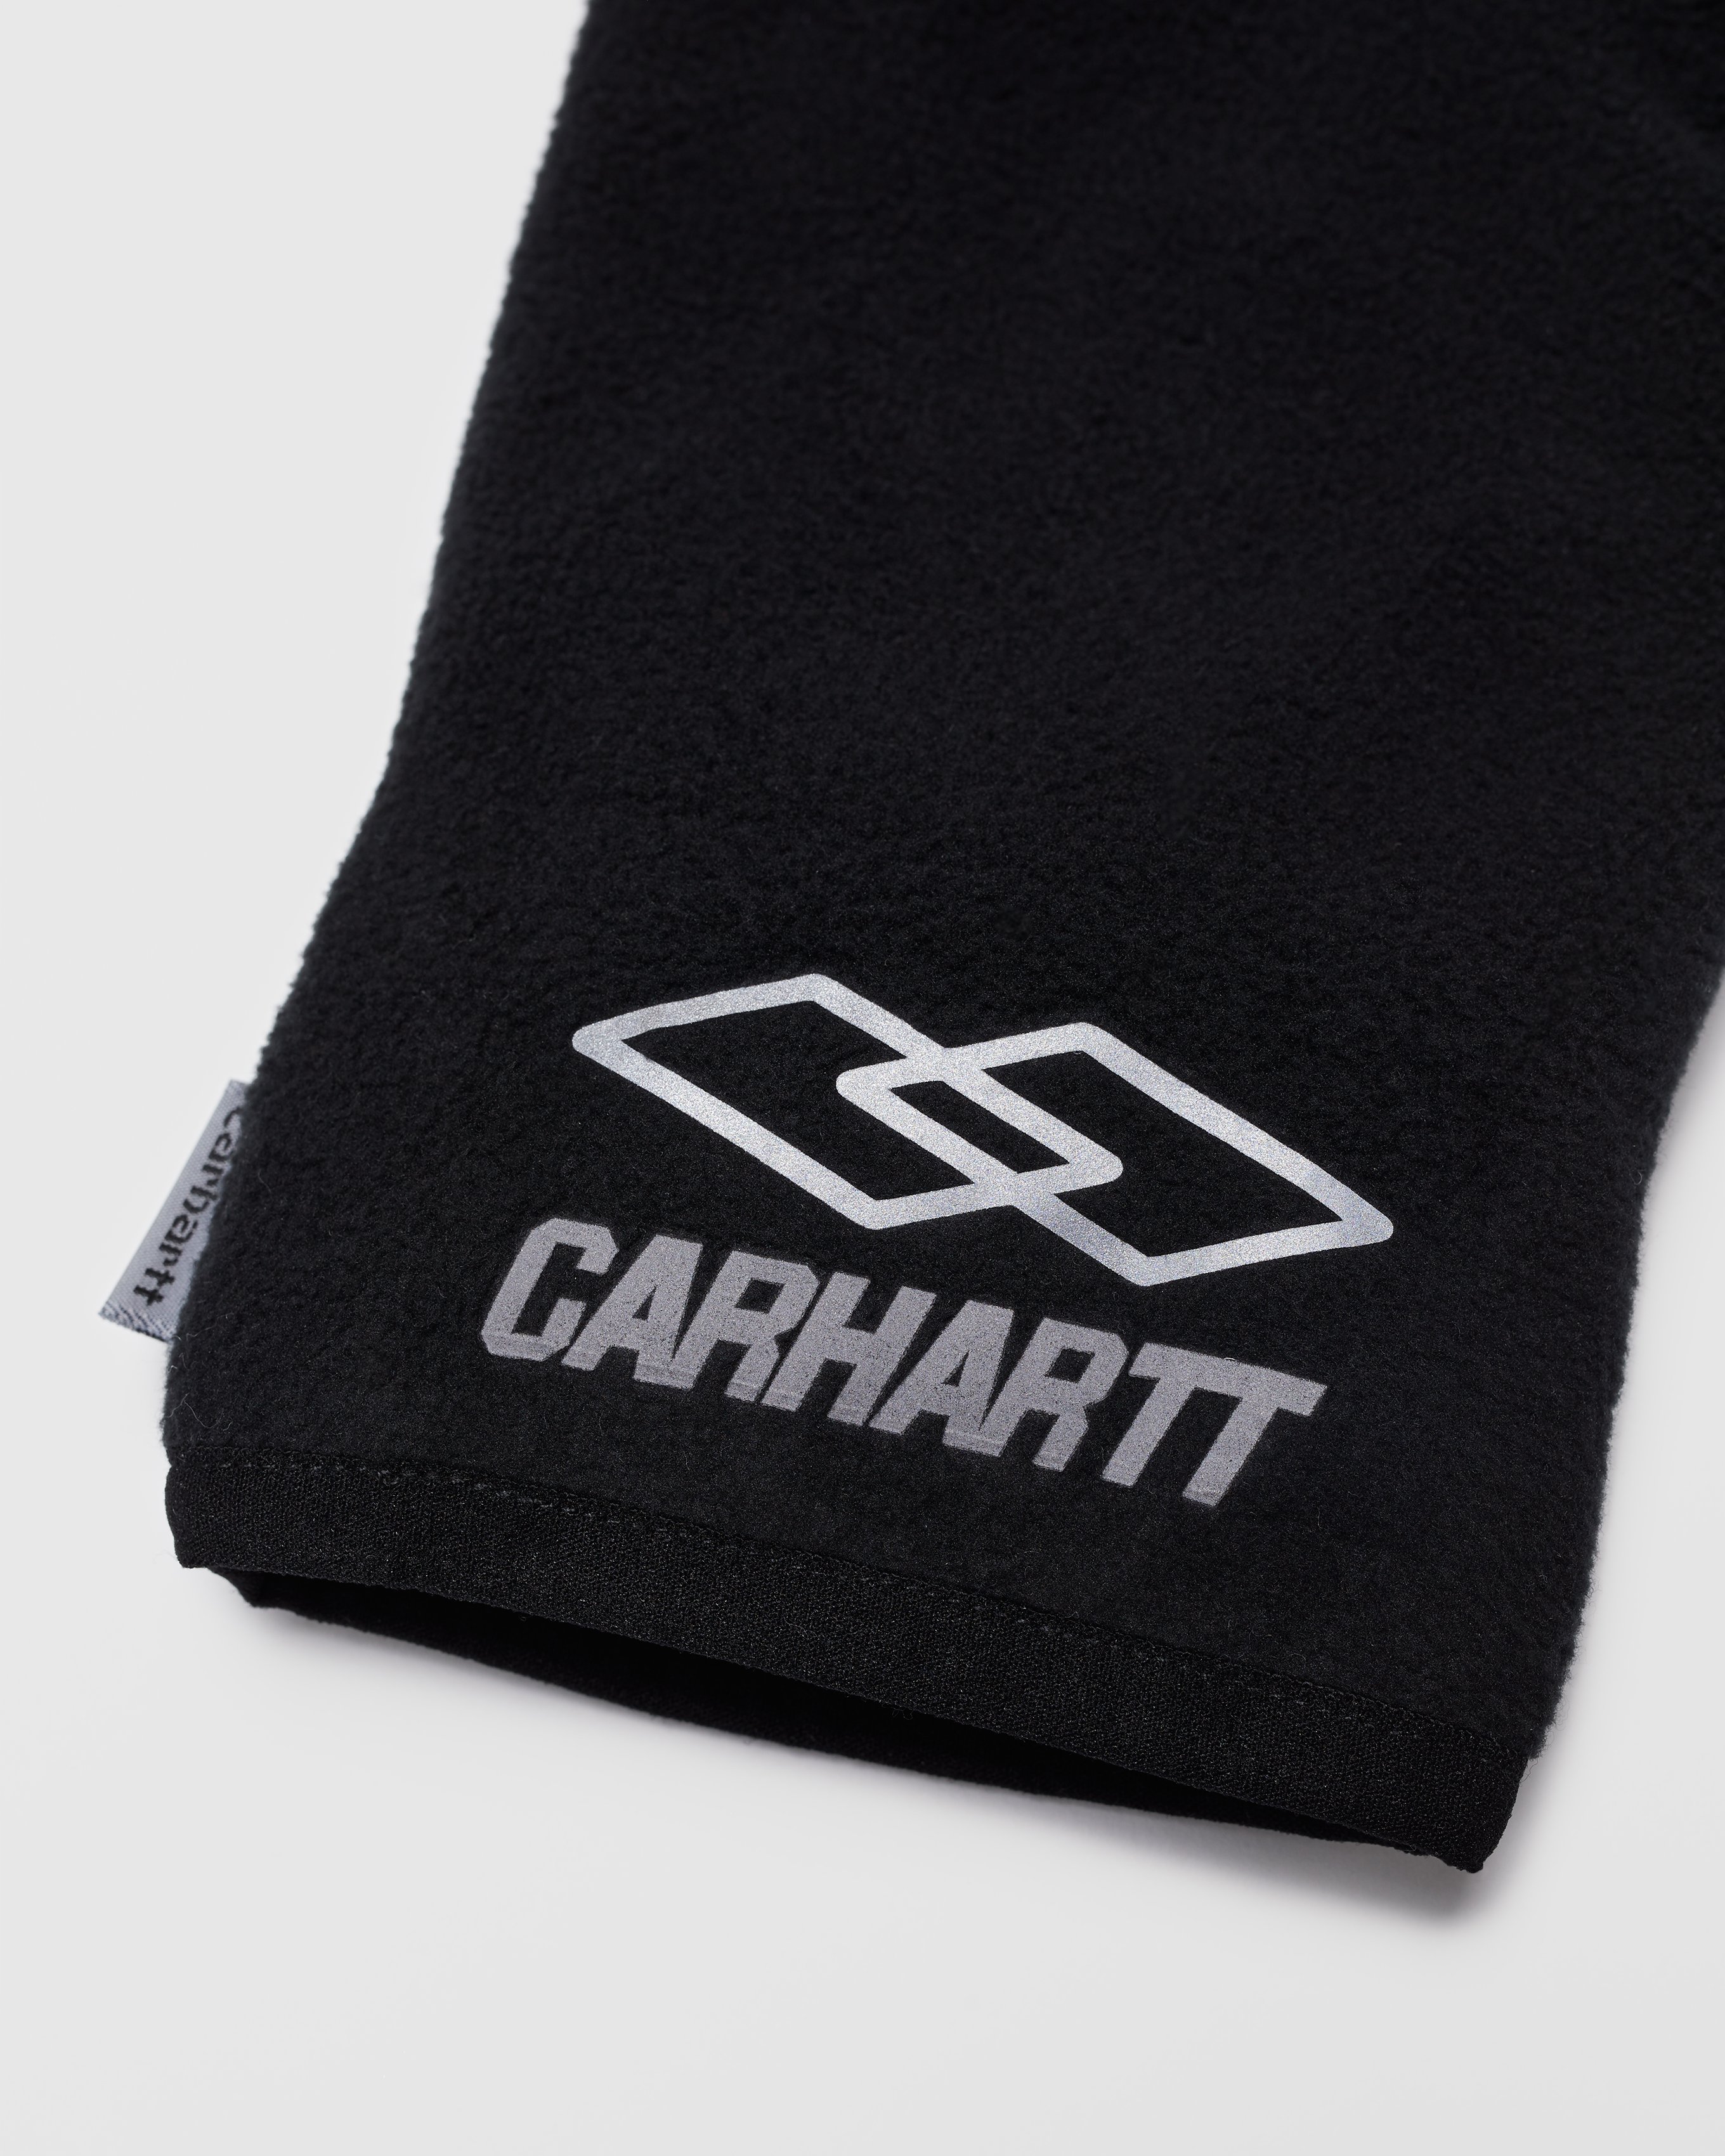 Carhartt WIP x Ljubav - Beaufort Gloves - Accessories - Black - Image 3